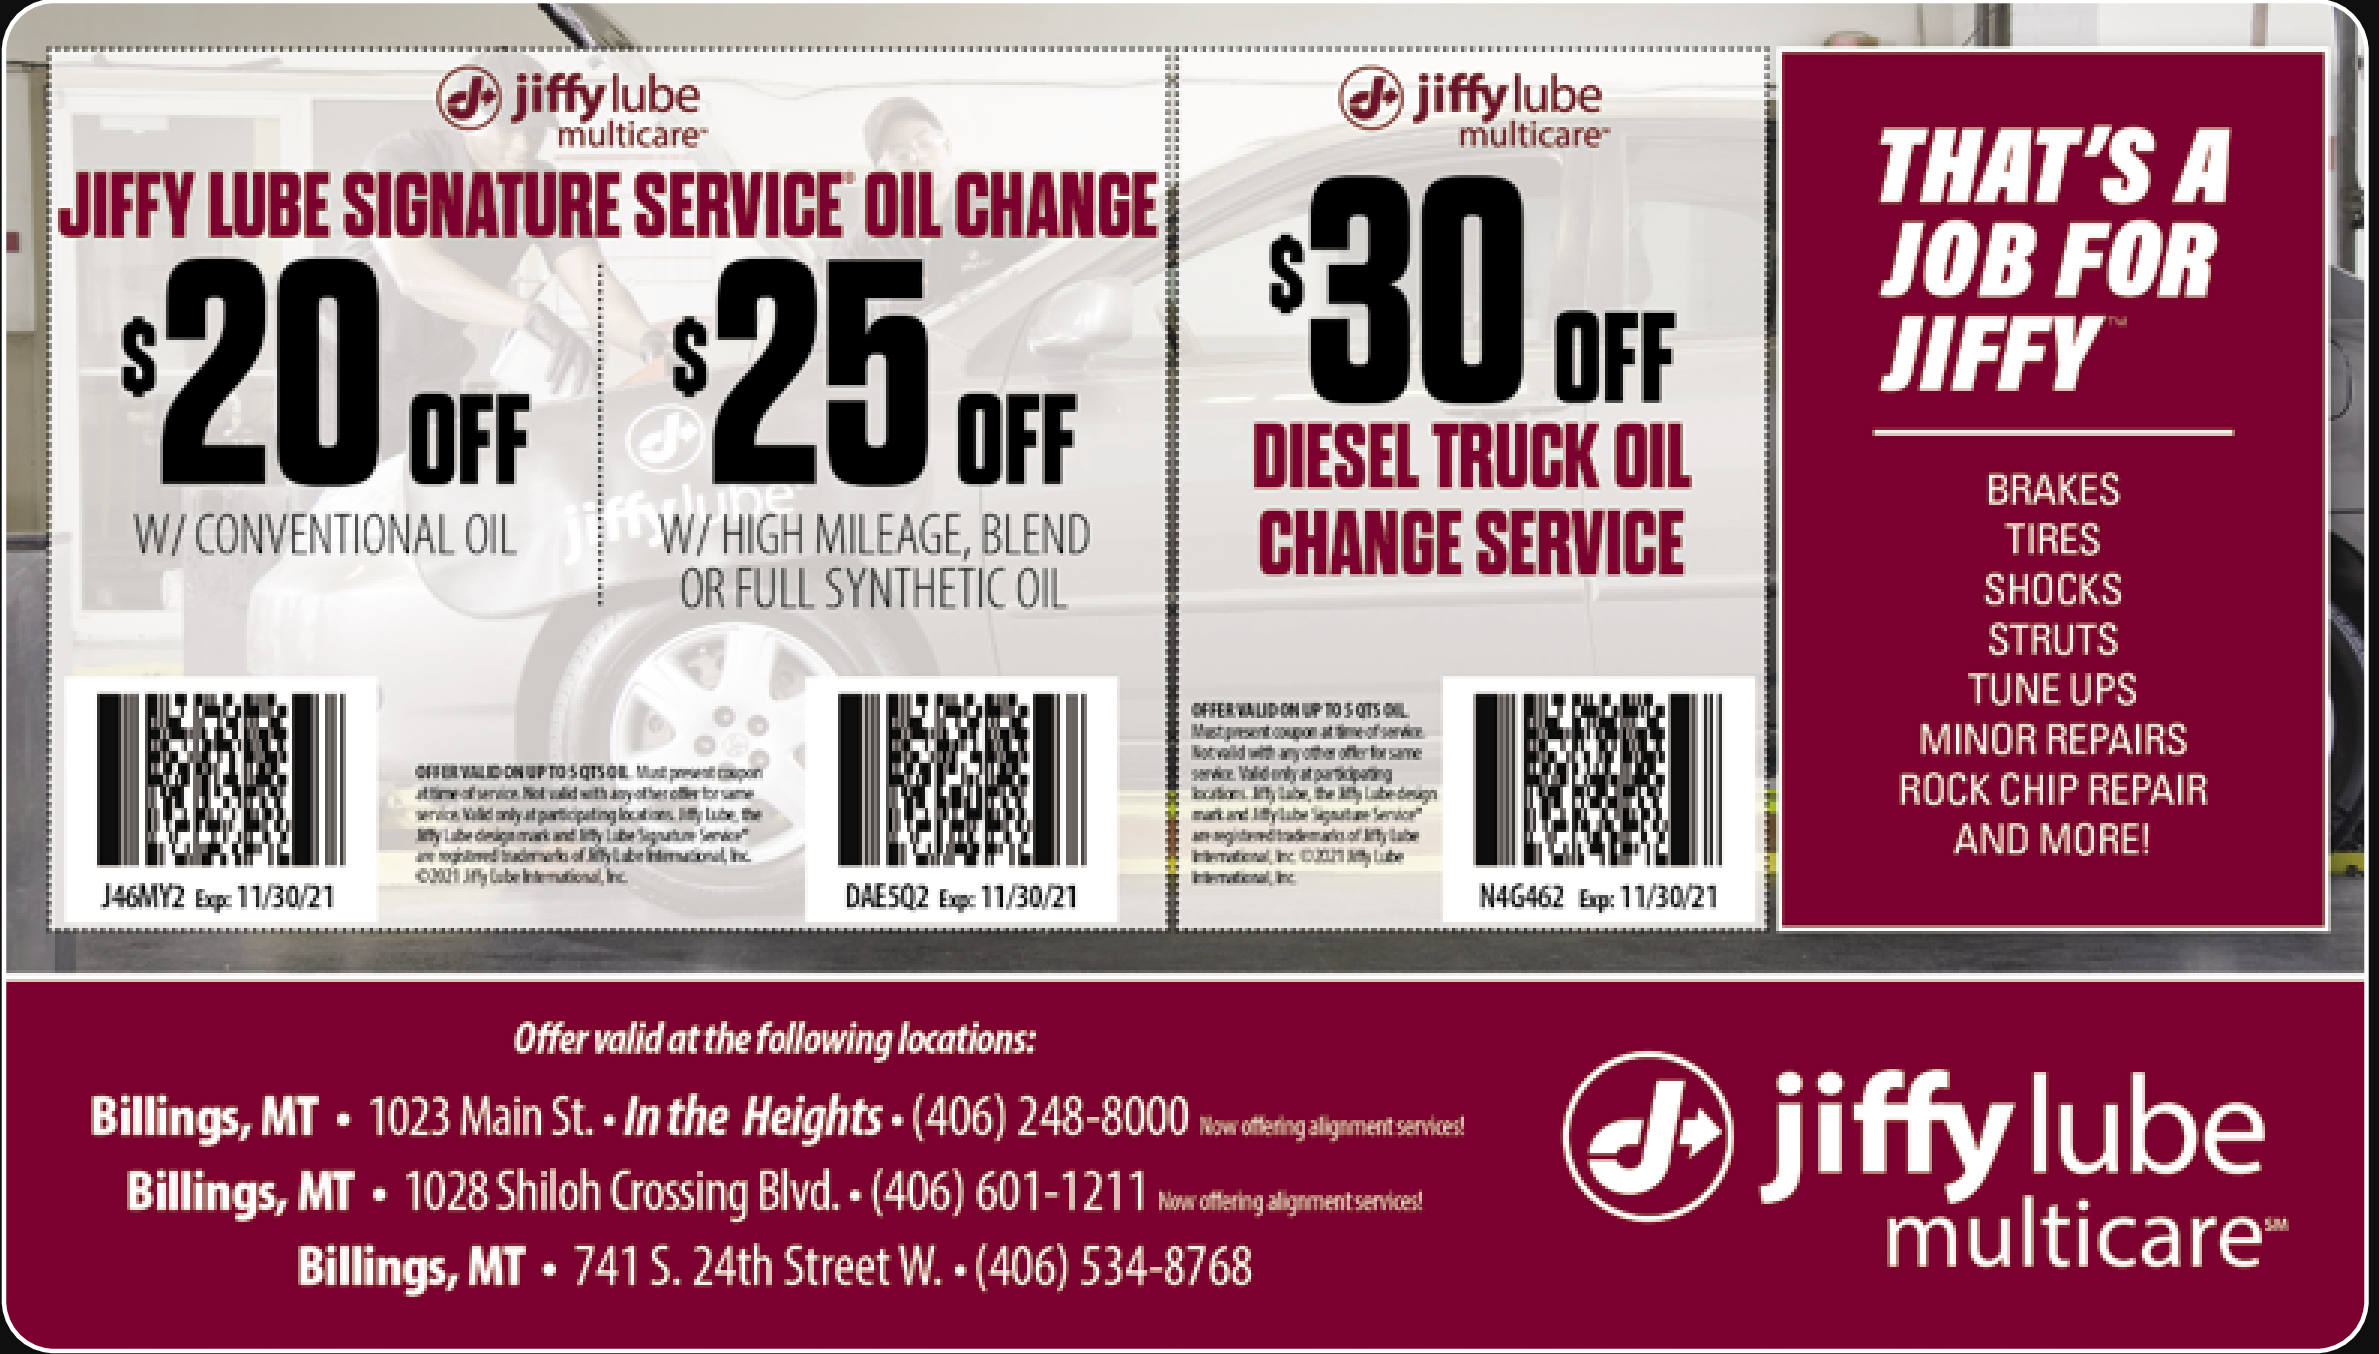 jiffy lube signature service coupon